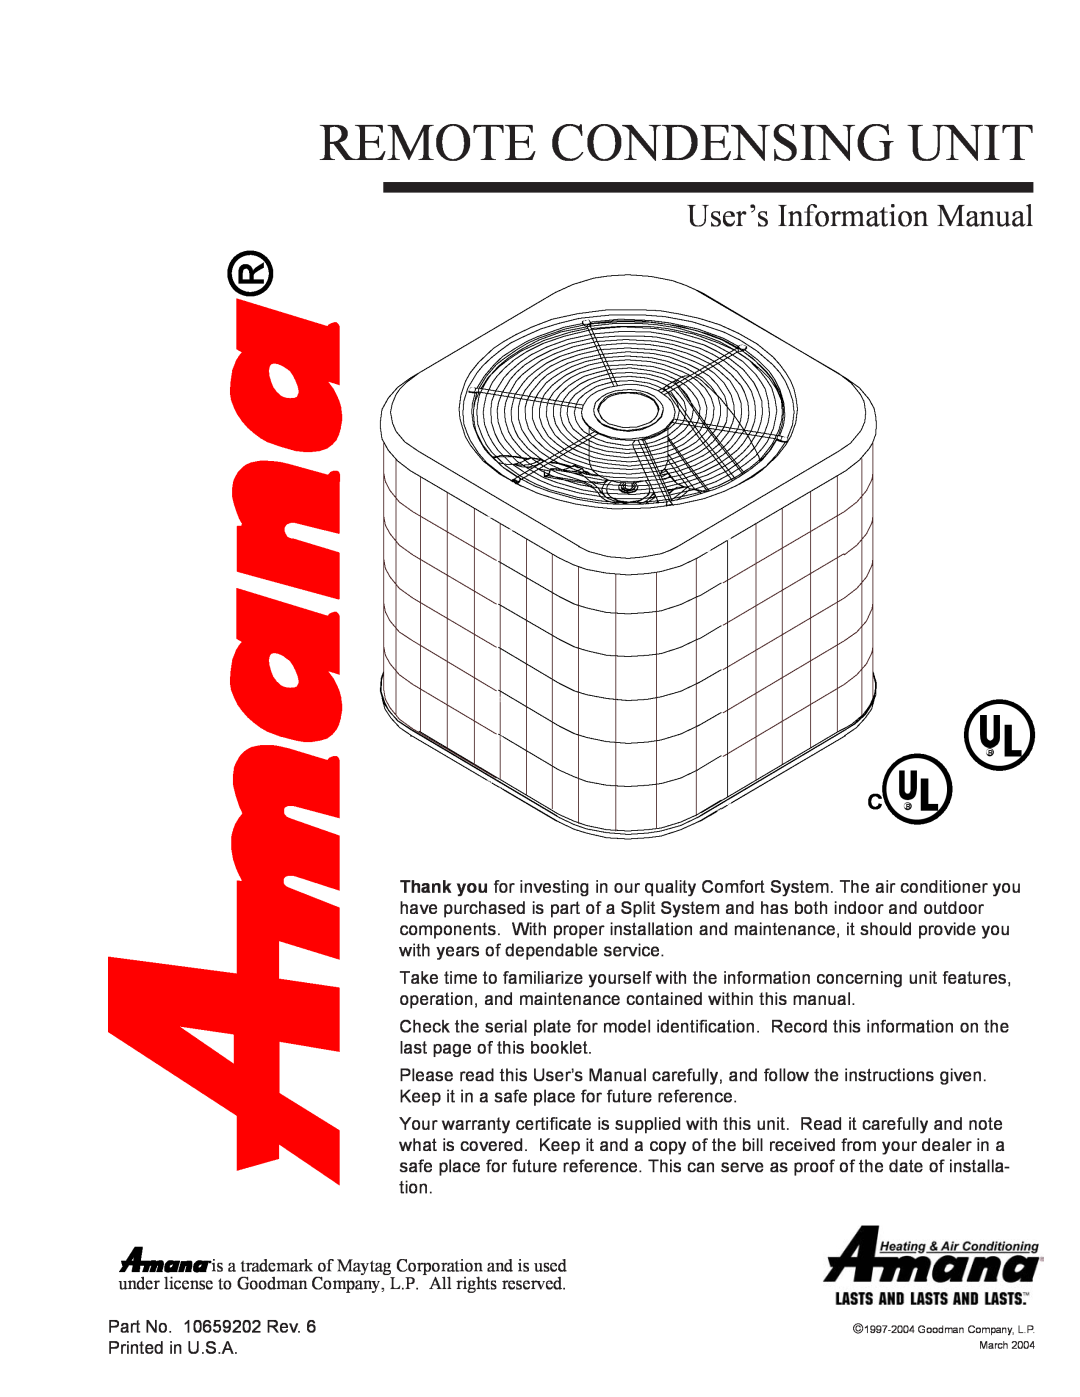 Amana REMOTE CONDENSING UNIT user manual Remote Condensing Unit, User’s Information Manual 